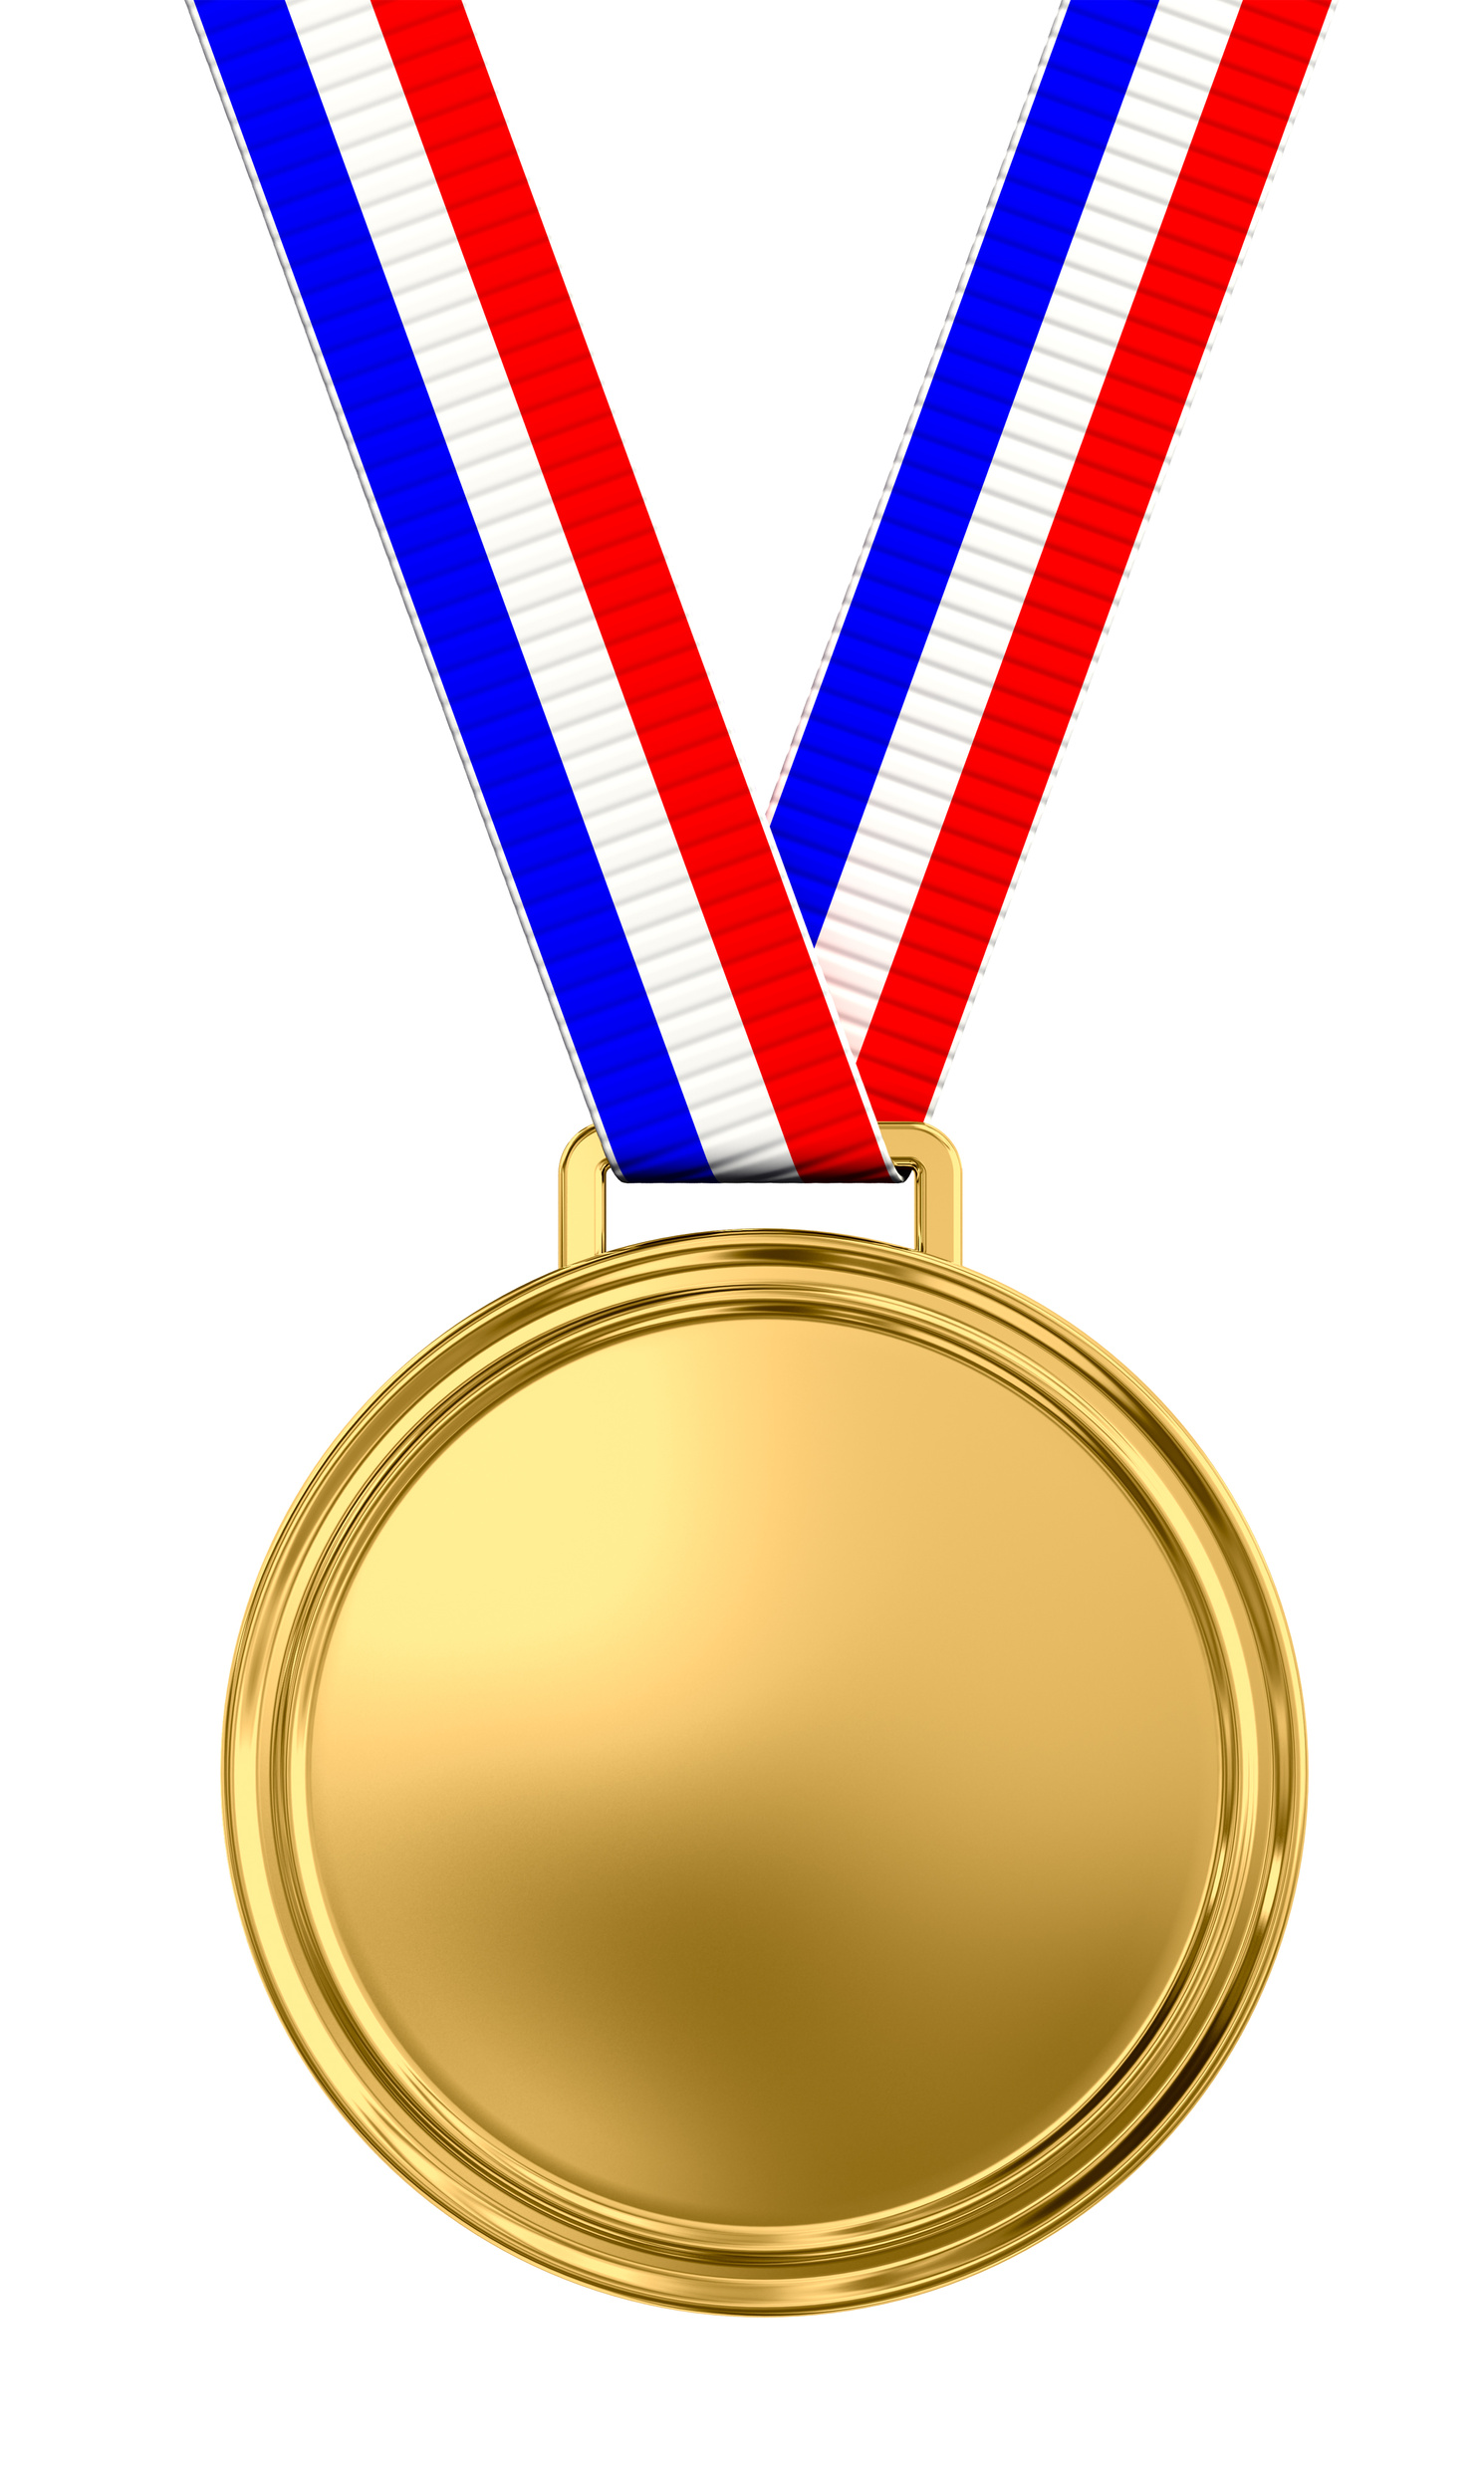 Award clipart medal, Award medal Transparent FREE for